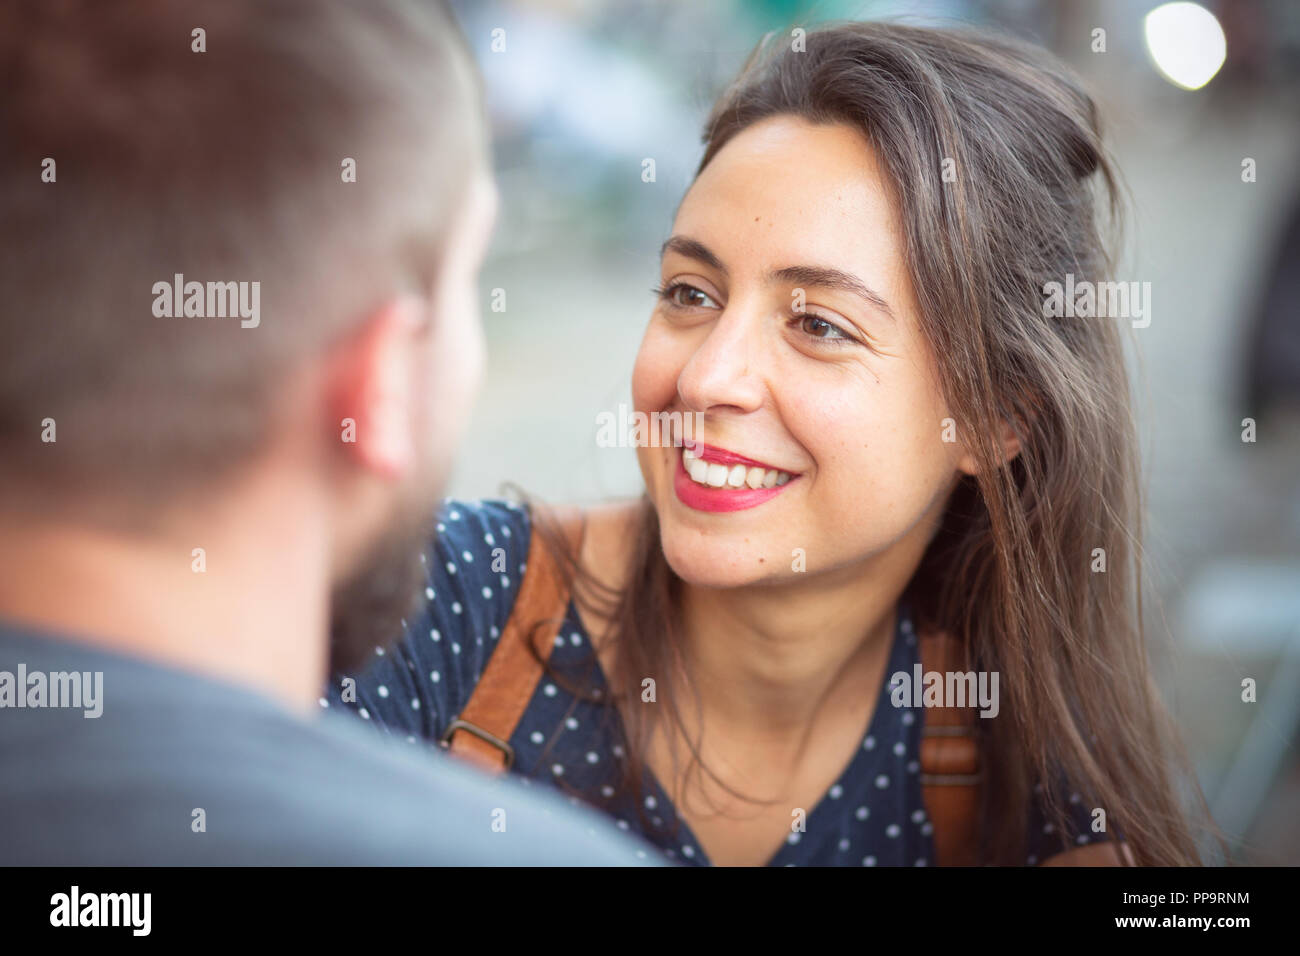 Smiling woman having a conversation Stock Photo